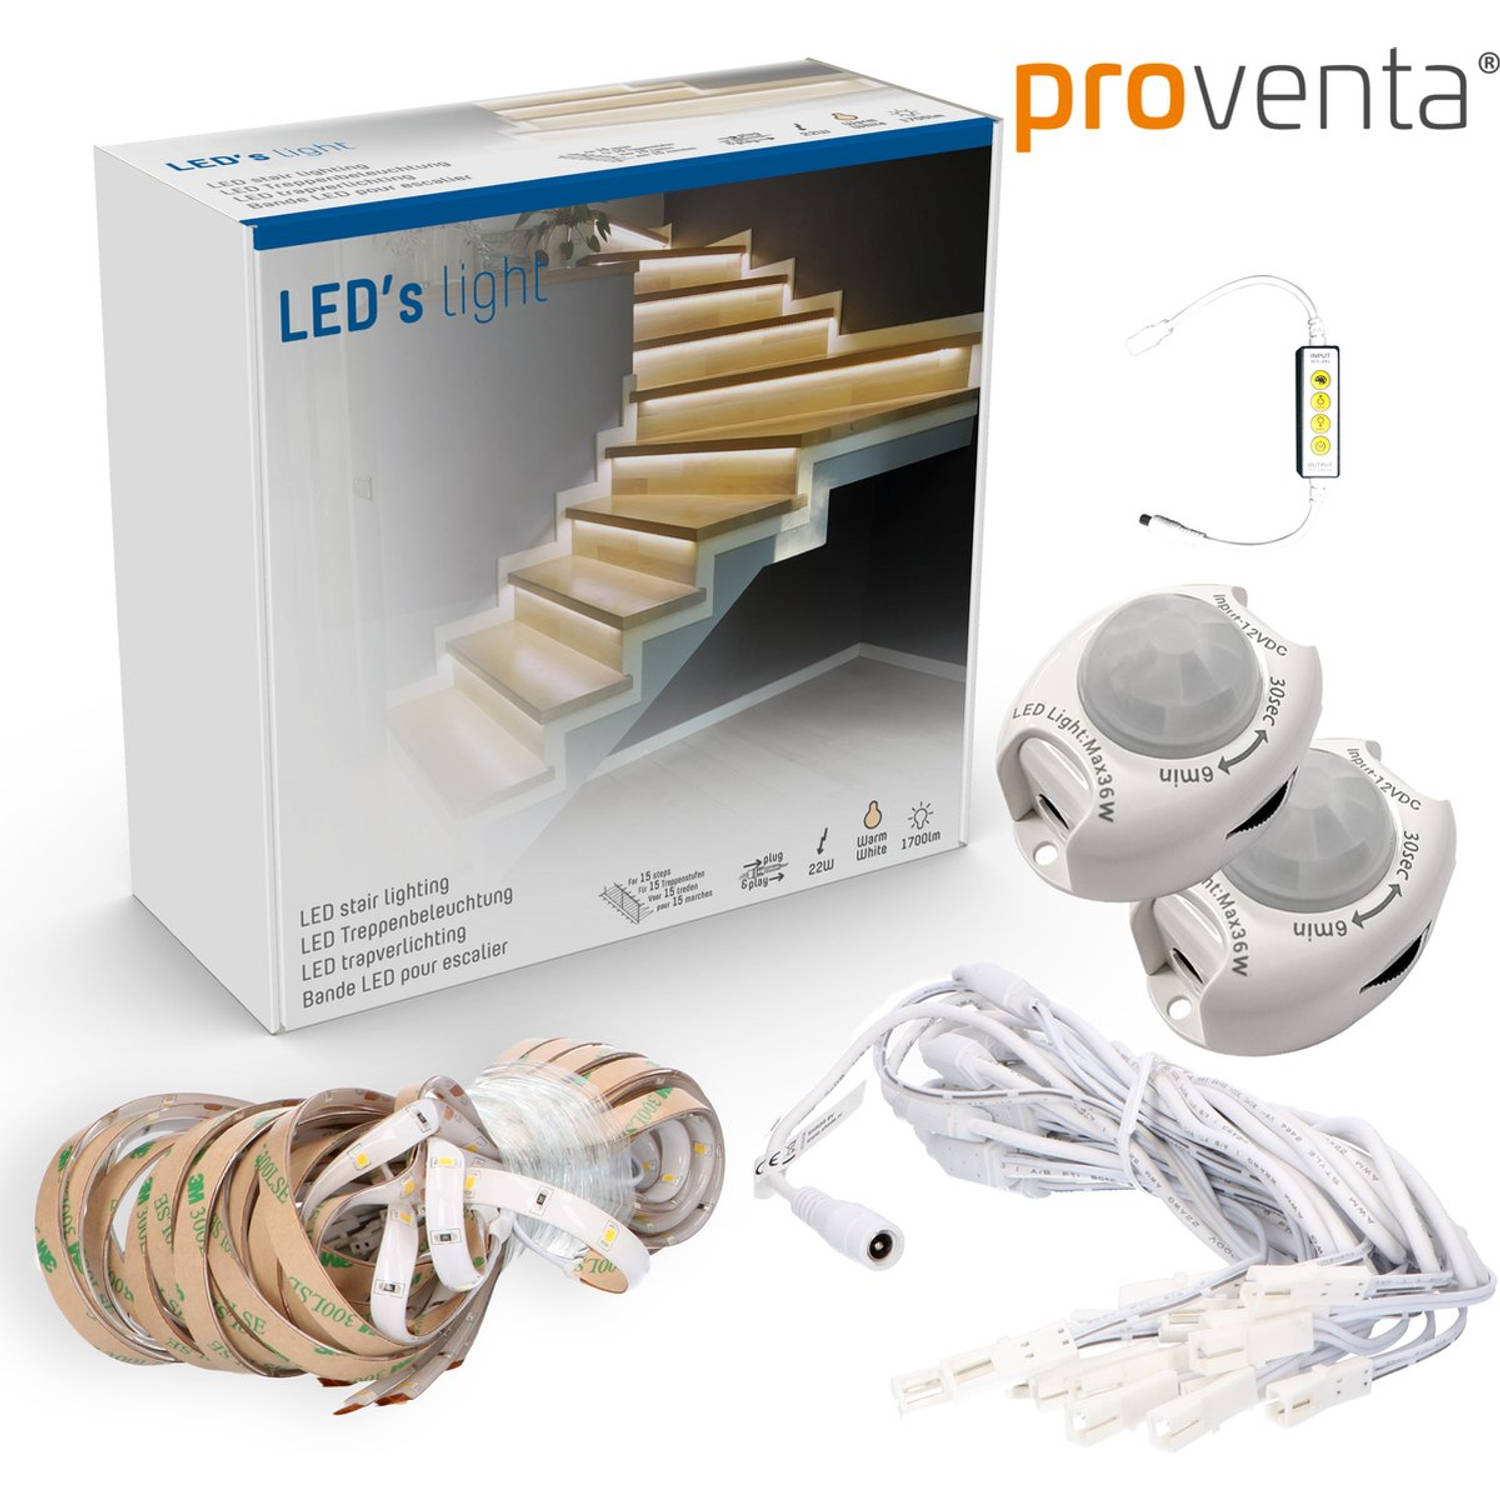 Terugspoelen Onderscheiden informatie Proventa LED Trapverlichting set met bewegingssensor - 15 x LED strip 80 cm  - Warm wit licht | Blokker